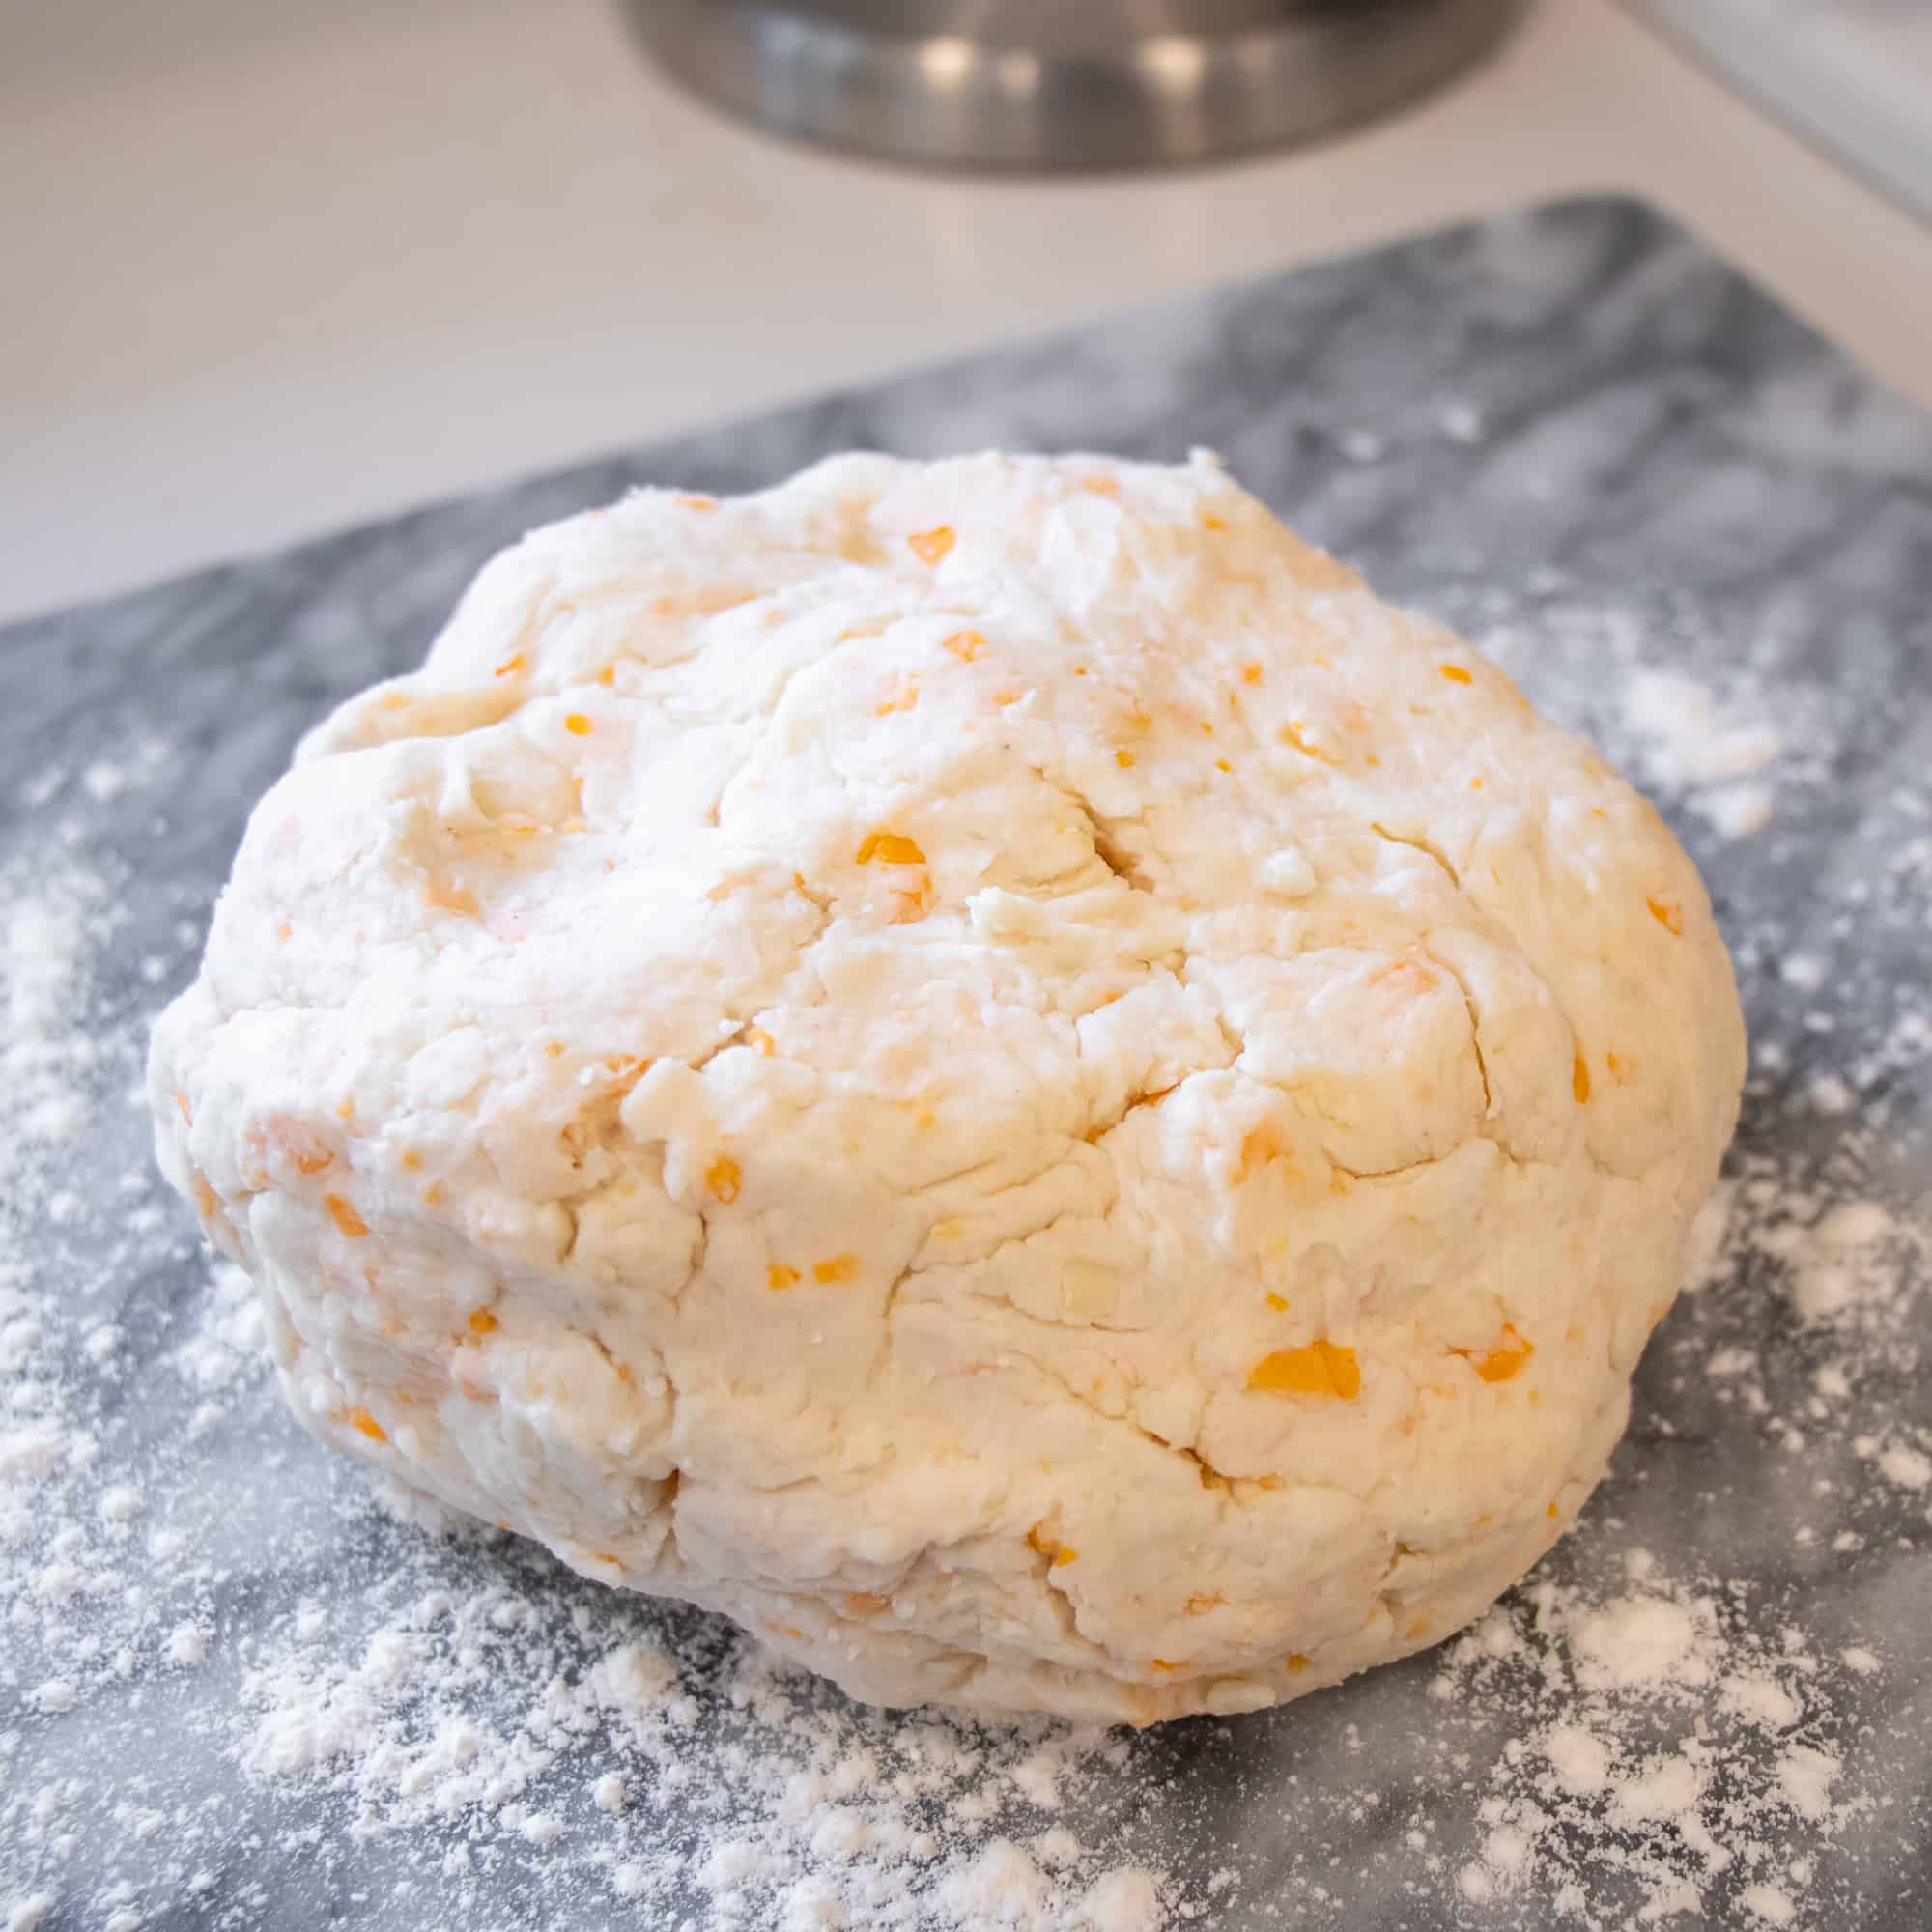 Put the dough open a floured surface